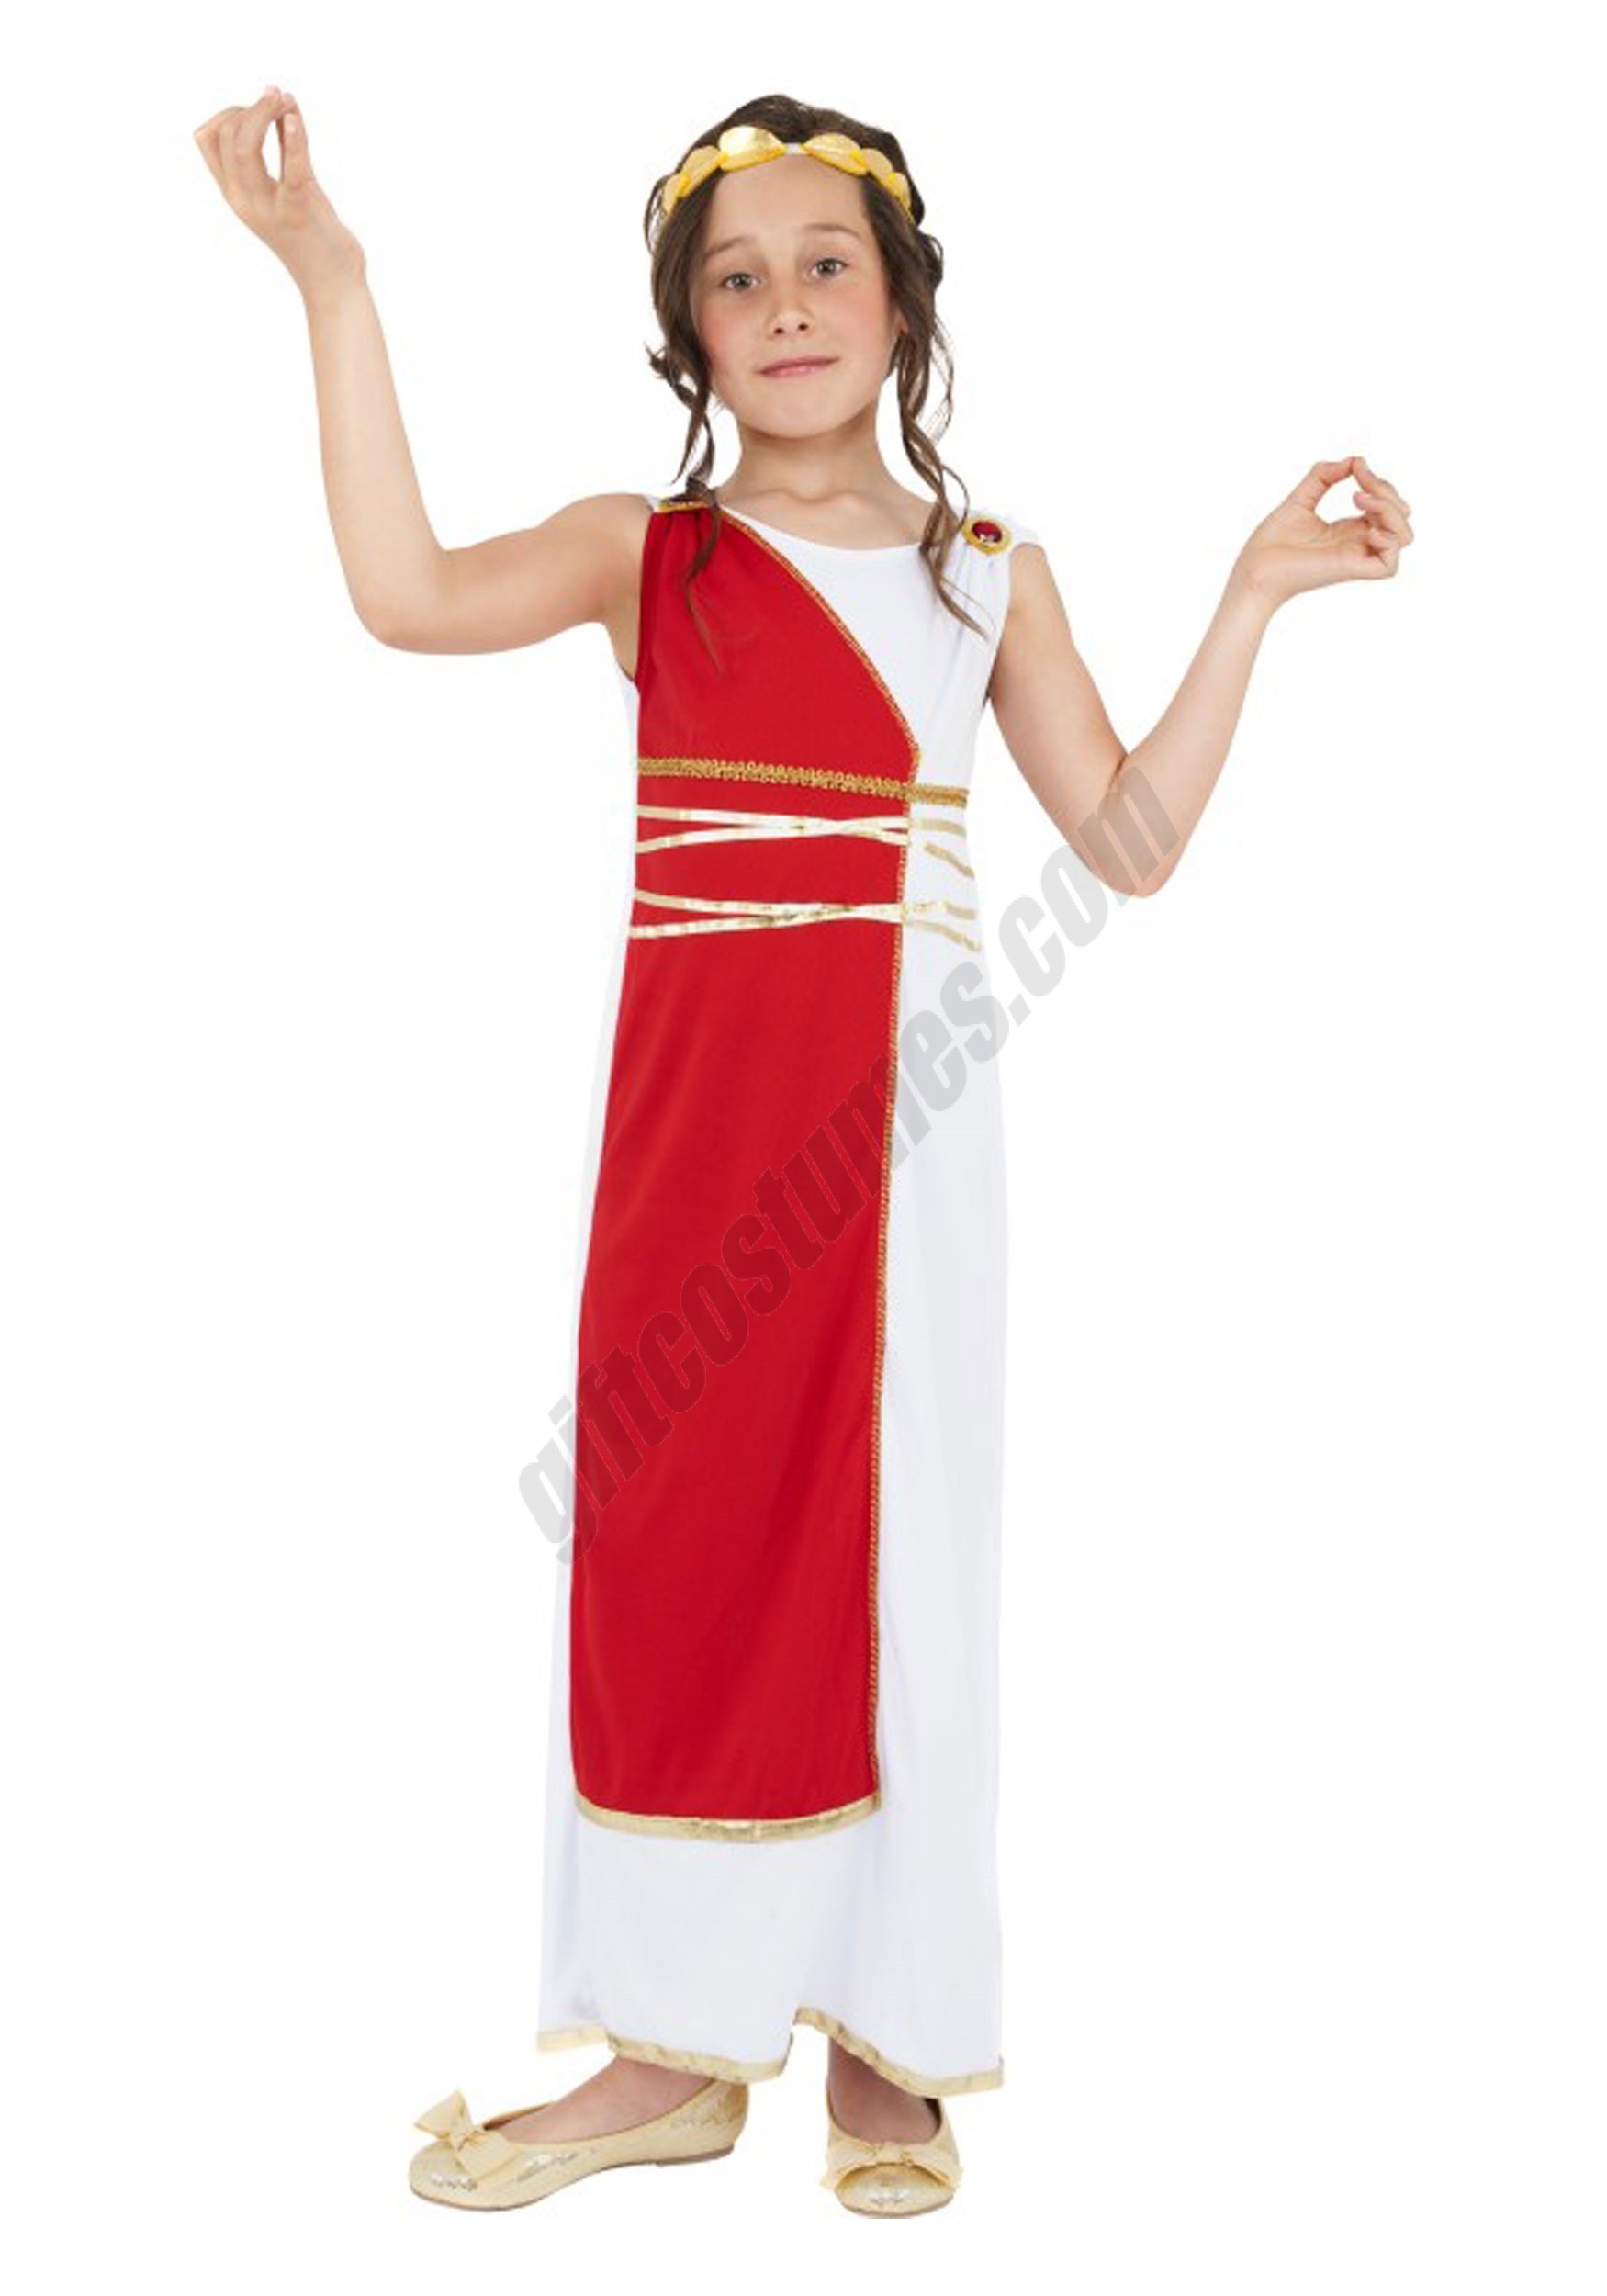 Roman Costume for Girls Promotions - Roman Costume for Girls Promotions